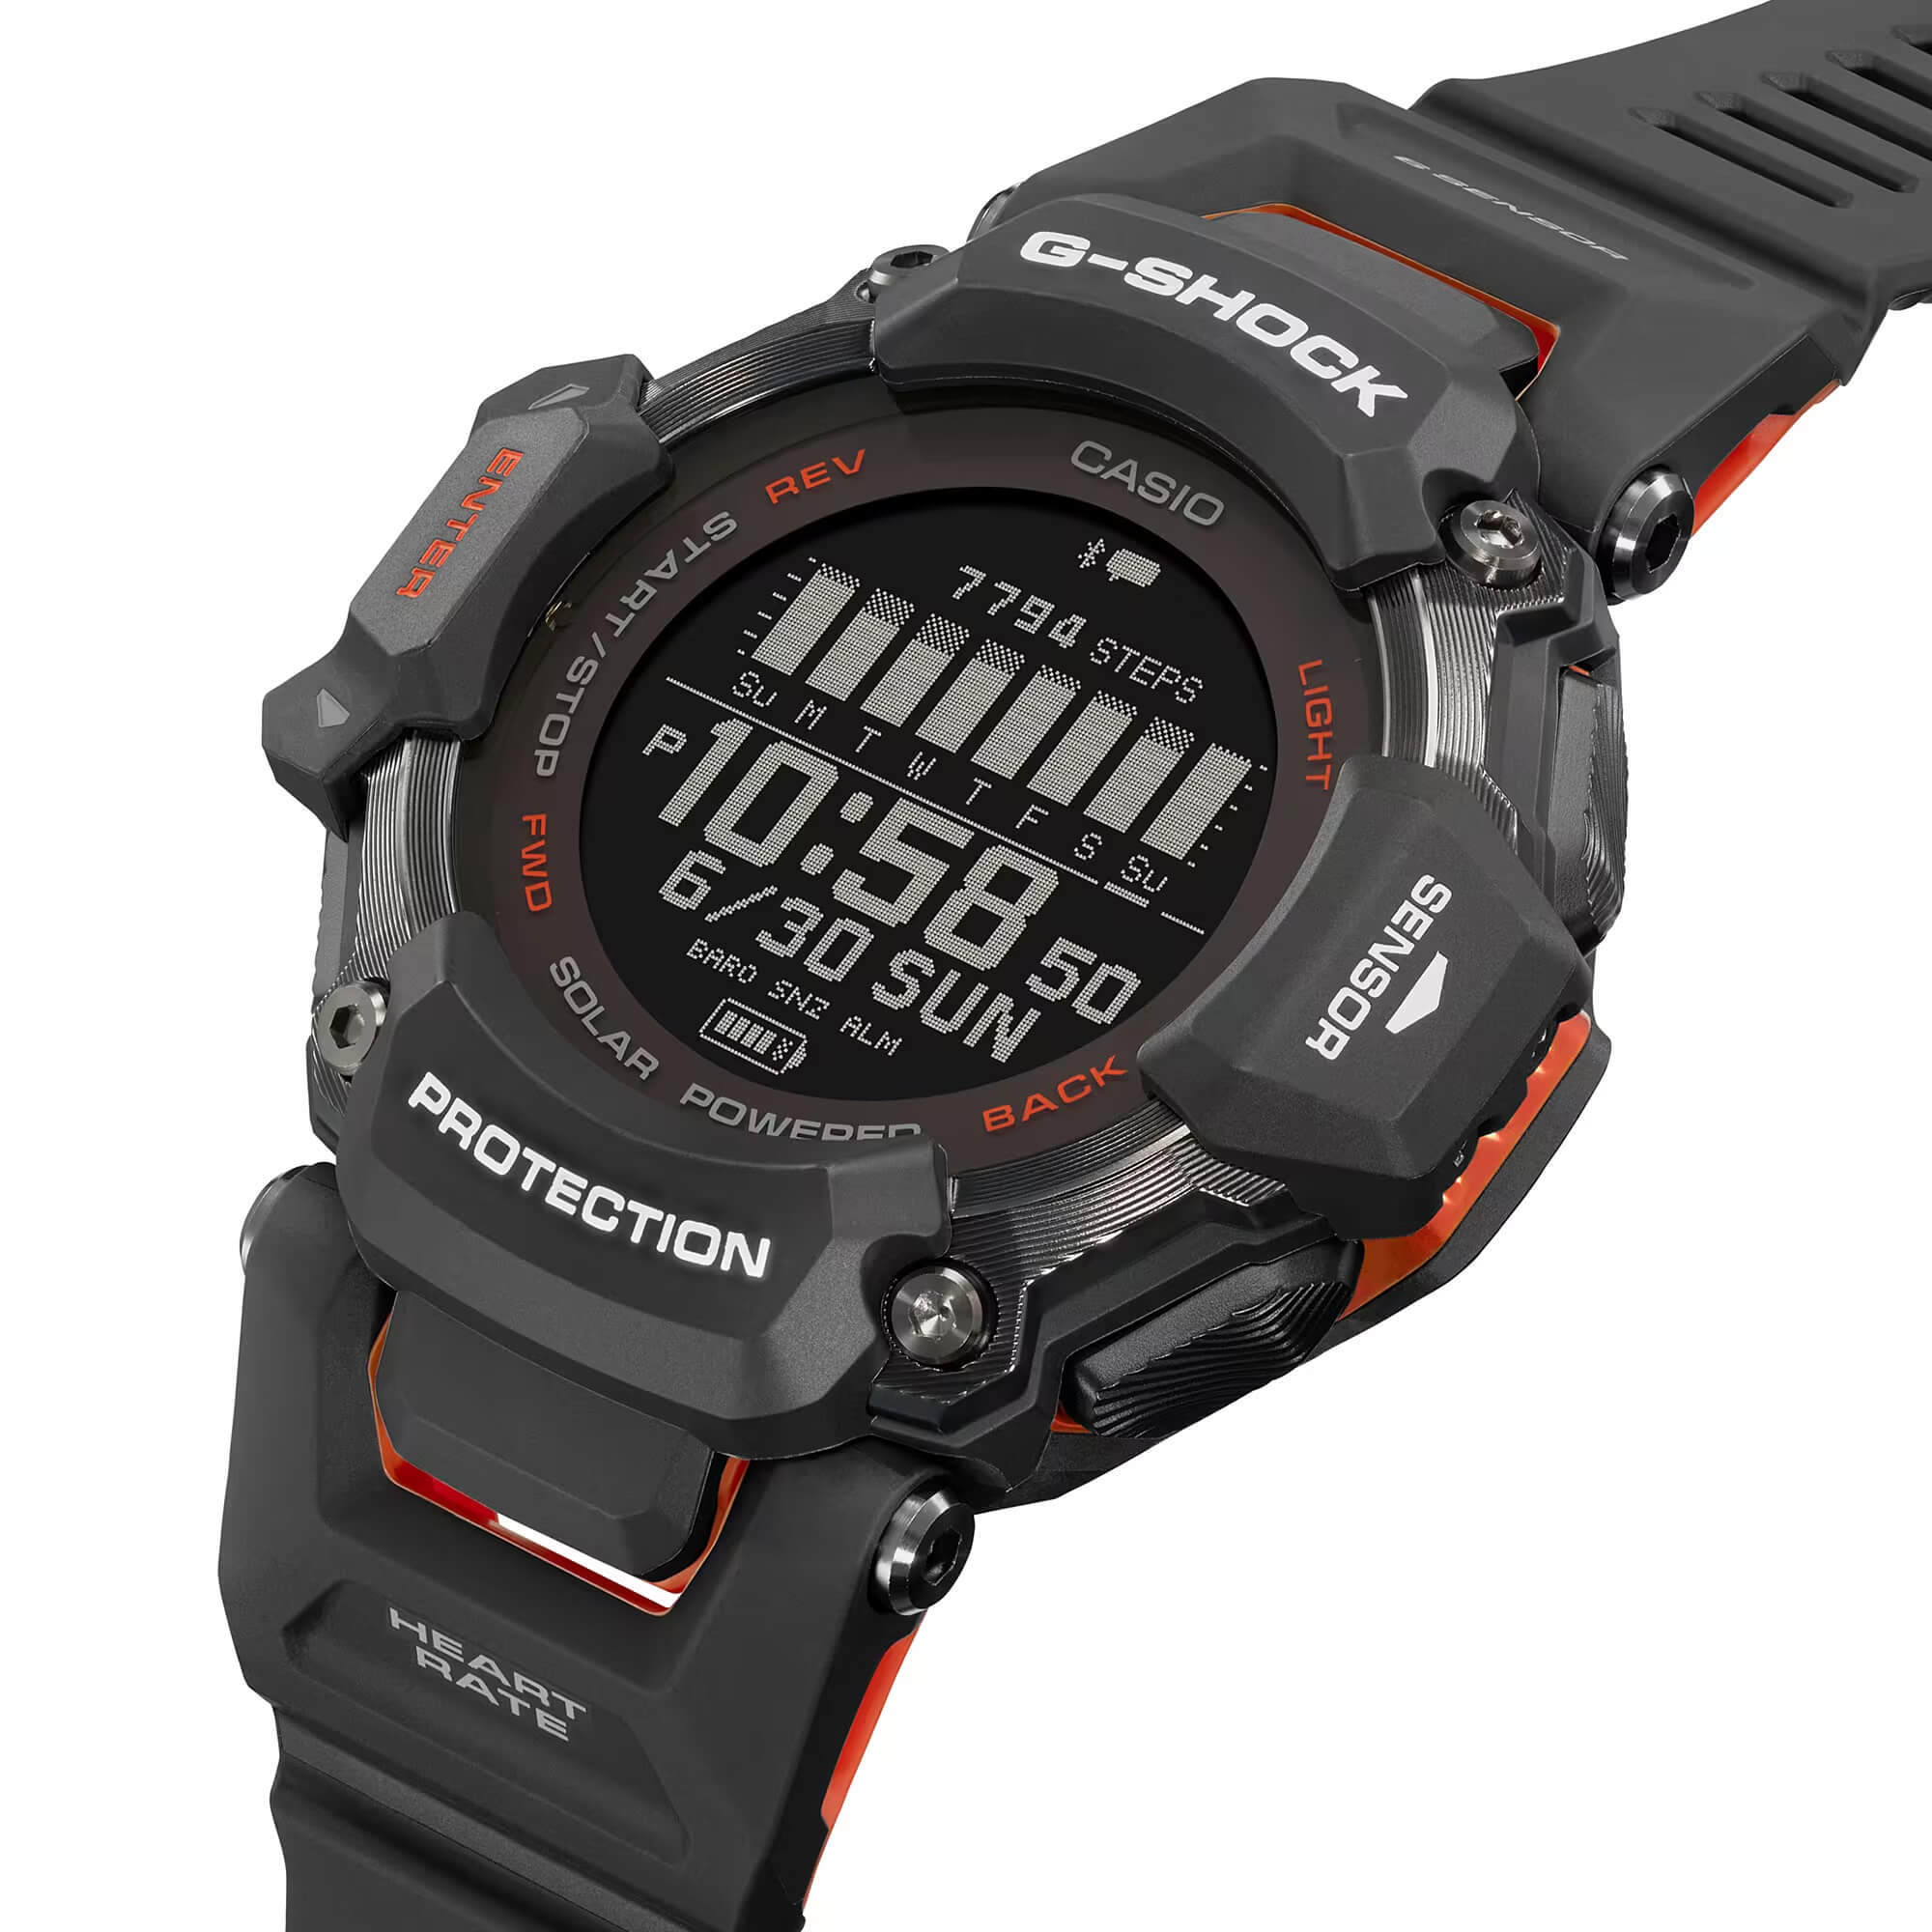 G-Shock Move Digital Watch Black Metallic Case and Dial, Black Strap, 52.6mm